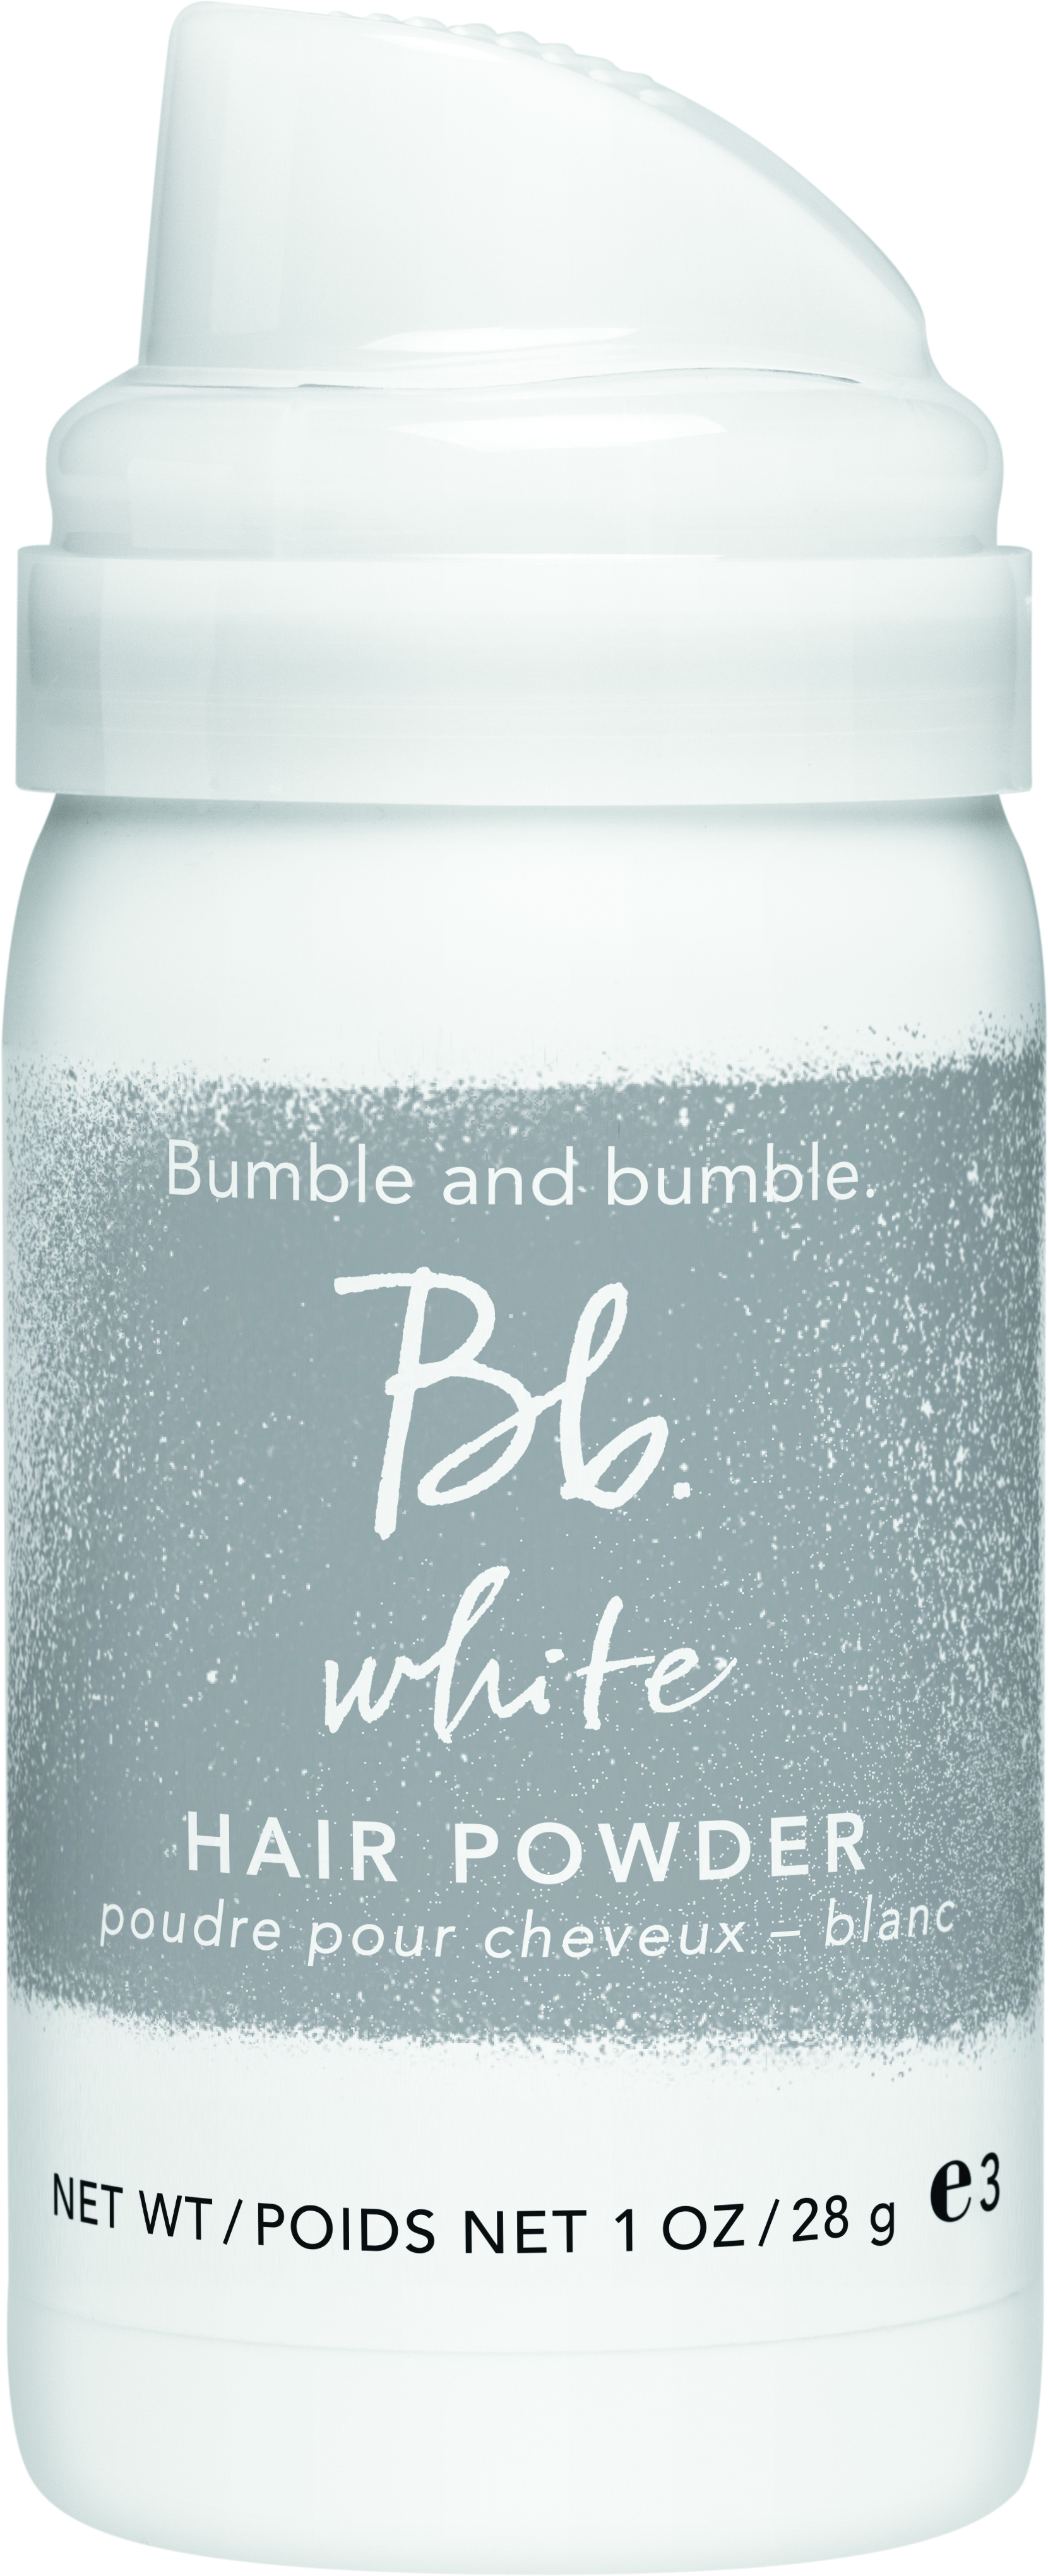 Bumble and bumble White Hair Powder 28g